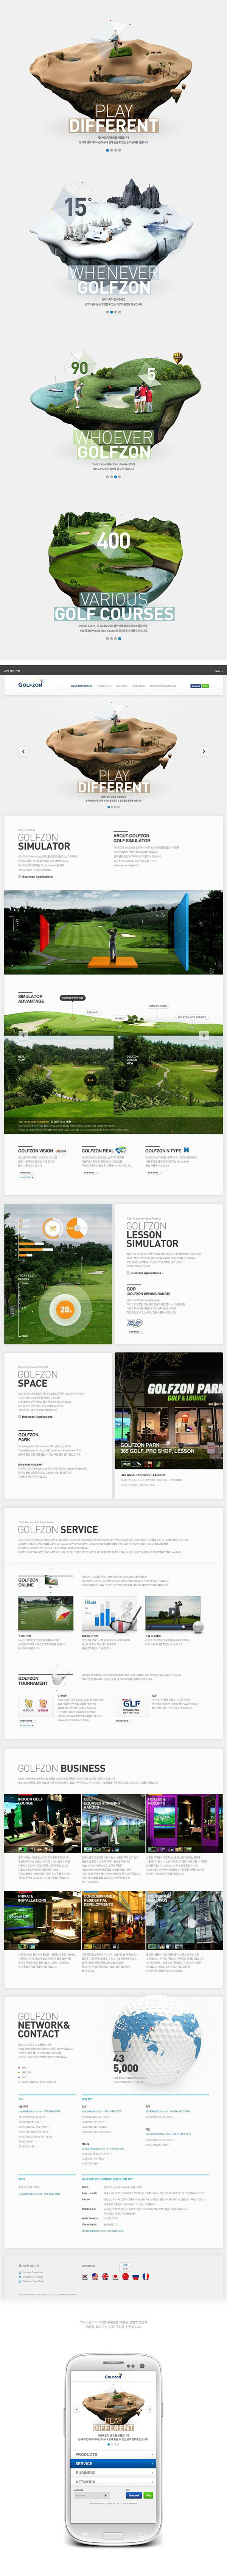 GolfZone Global Webs...